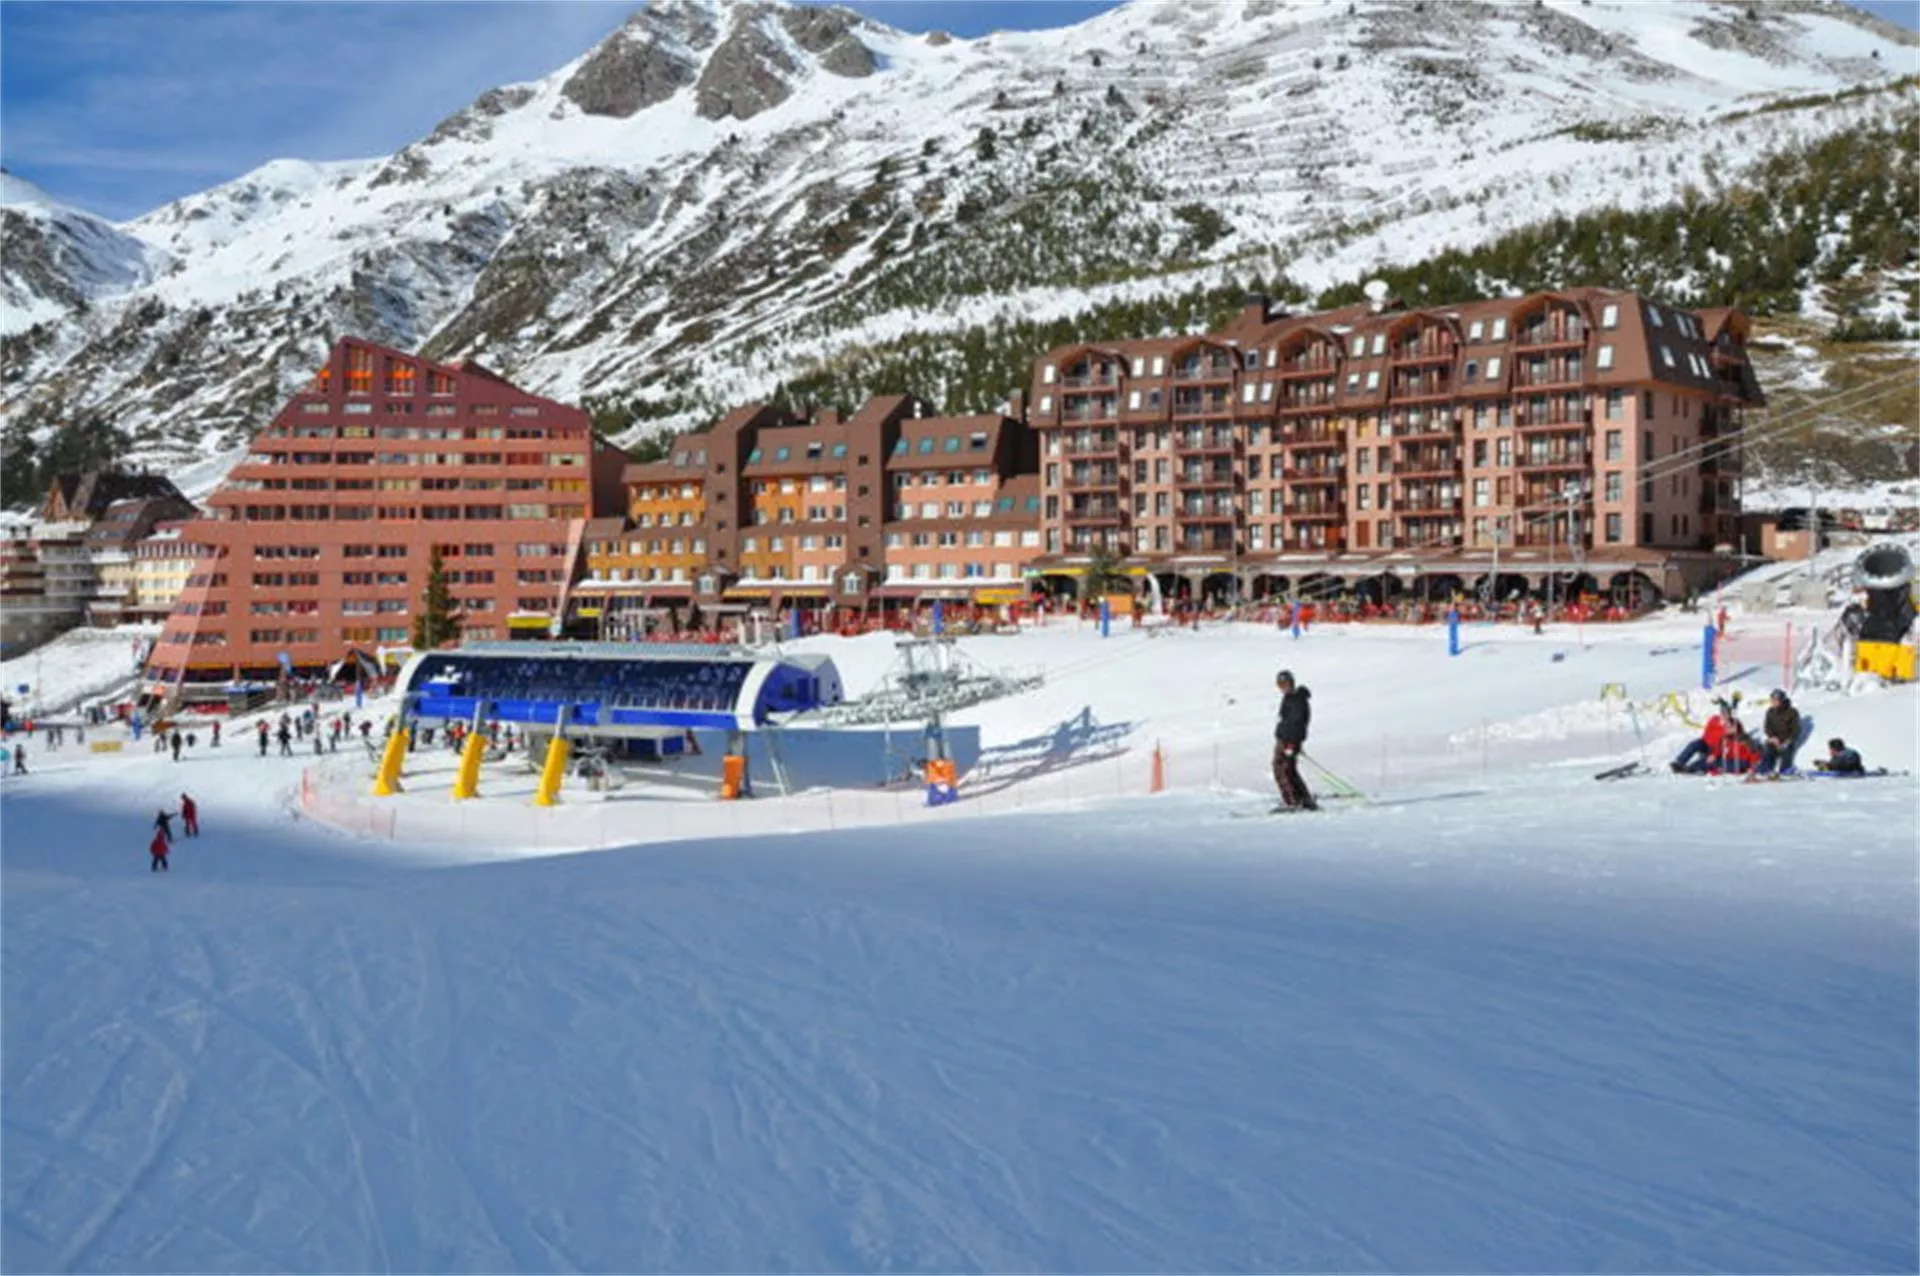 Astun in Spain, Europe | Snowboarding,Skiing - Rated 4.5